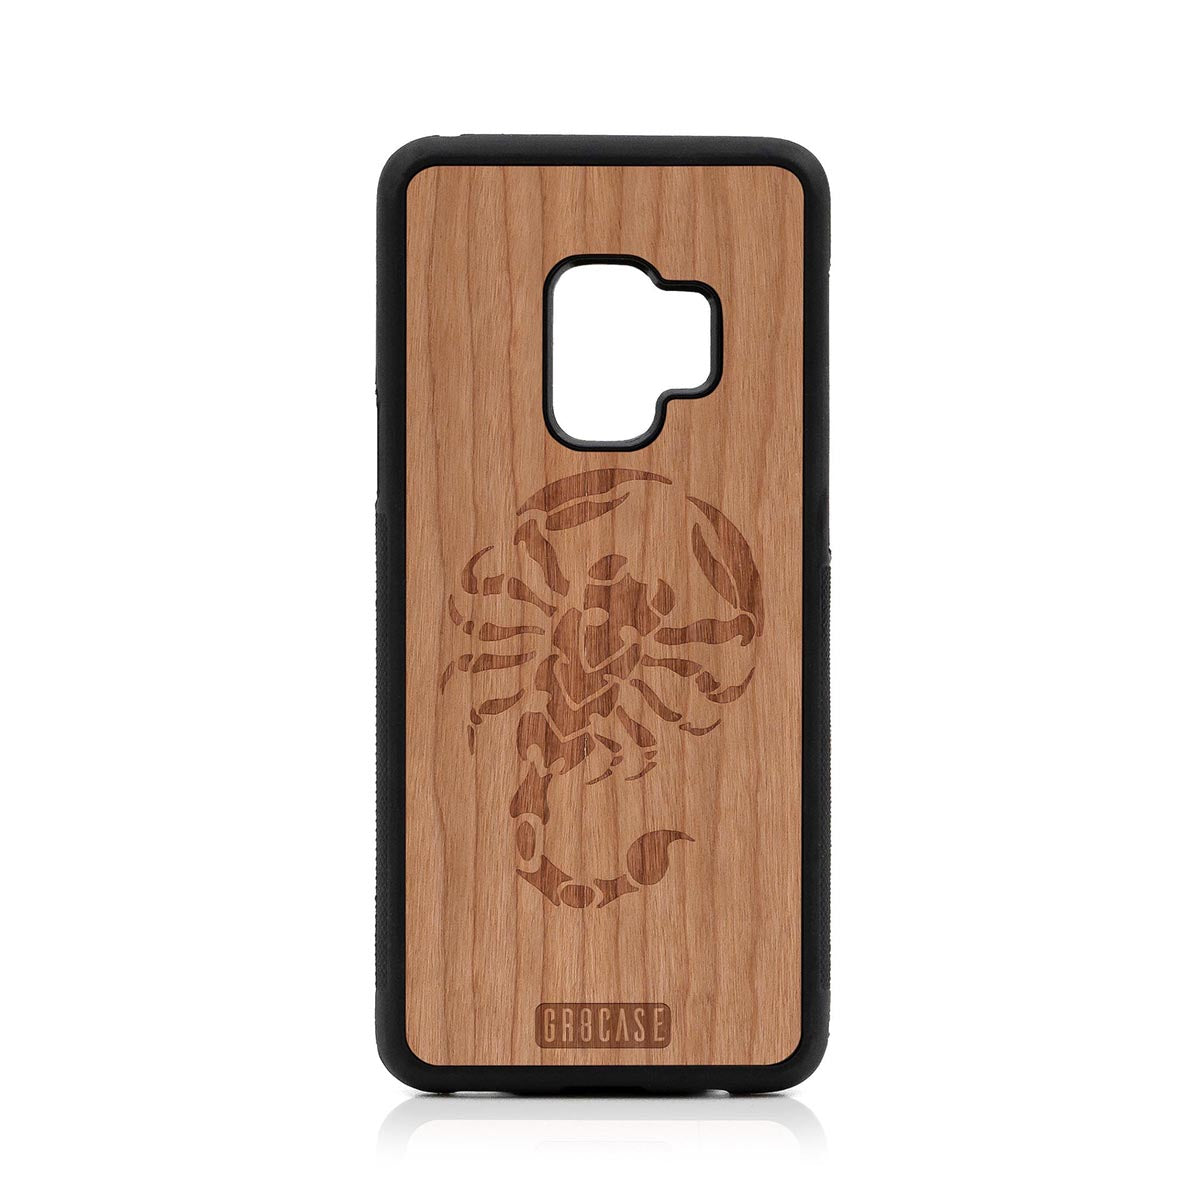 Scorpion Design Wood Case Samsung Galaxy S9 by GR8CASE